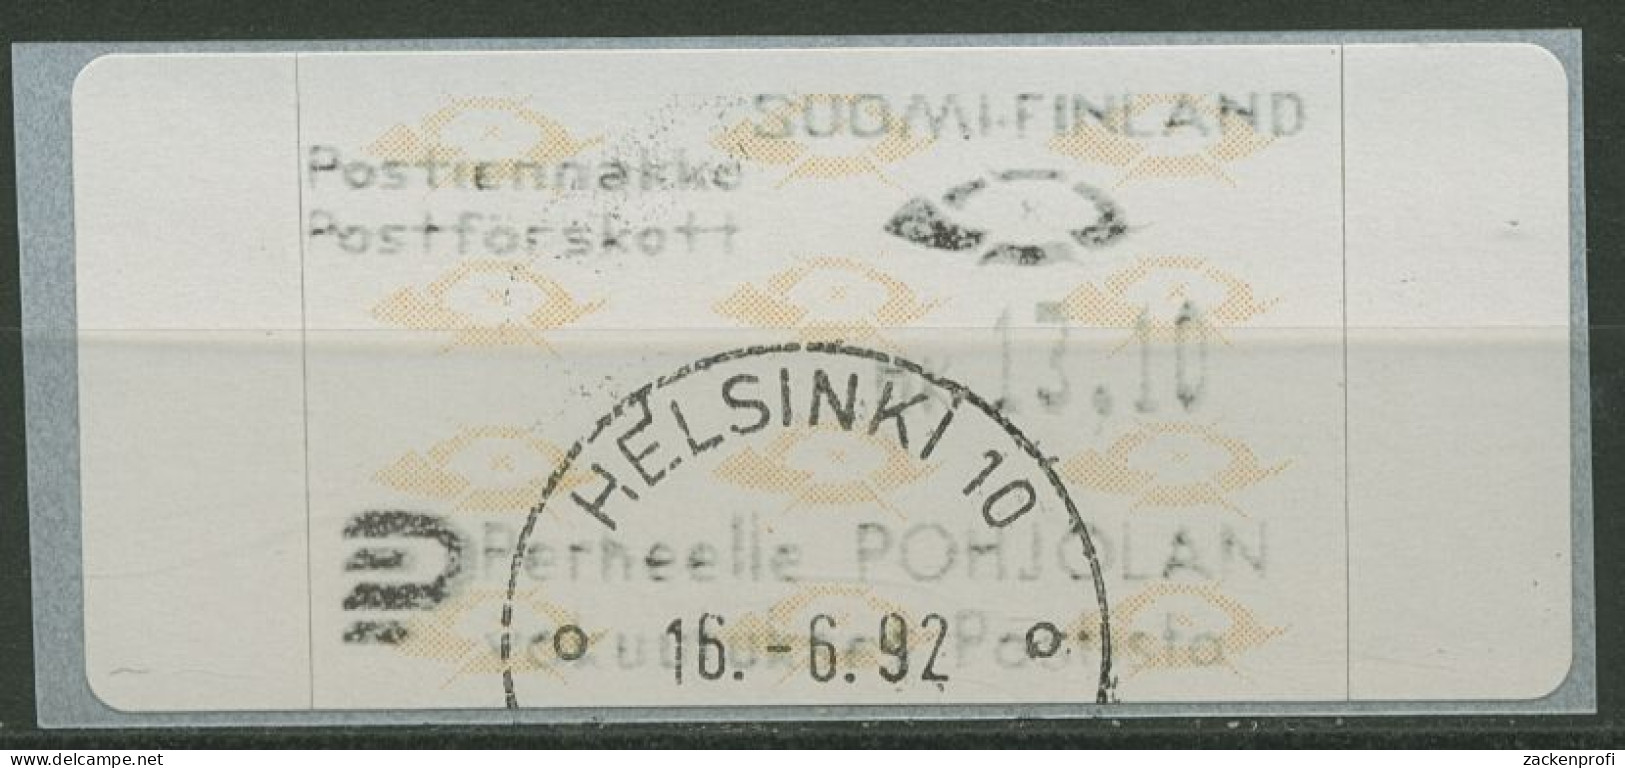 Finnland Automatenmarken 1992 Posthörner Einzelwert ATM 12.3 Z5 Gestempelt - Automaatzegels [ATM]